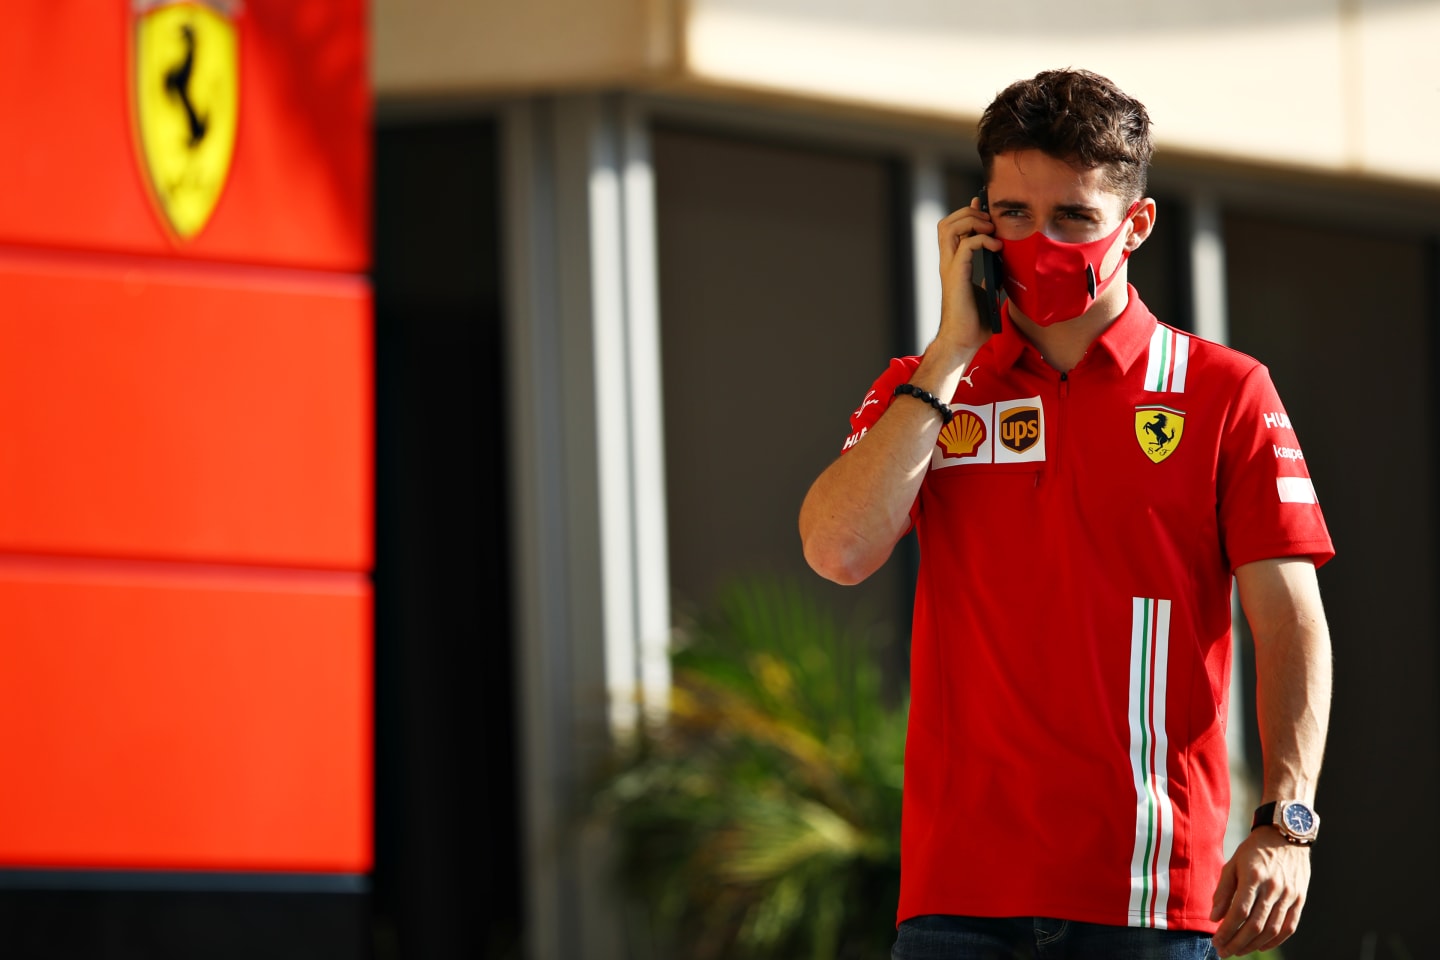 BAHRAIN, BAHRAIN - DECEMBER 03: Charles Leclerc of Monaco and Ferrari walks in the paddock on the